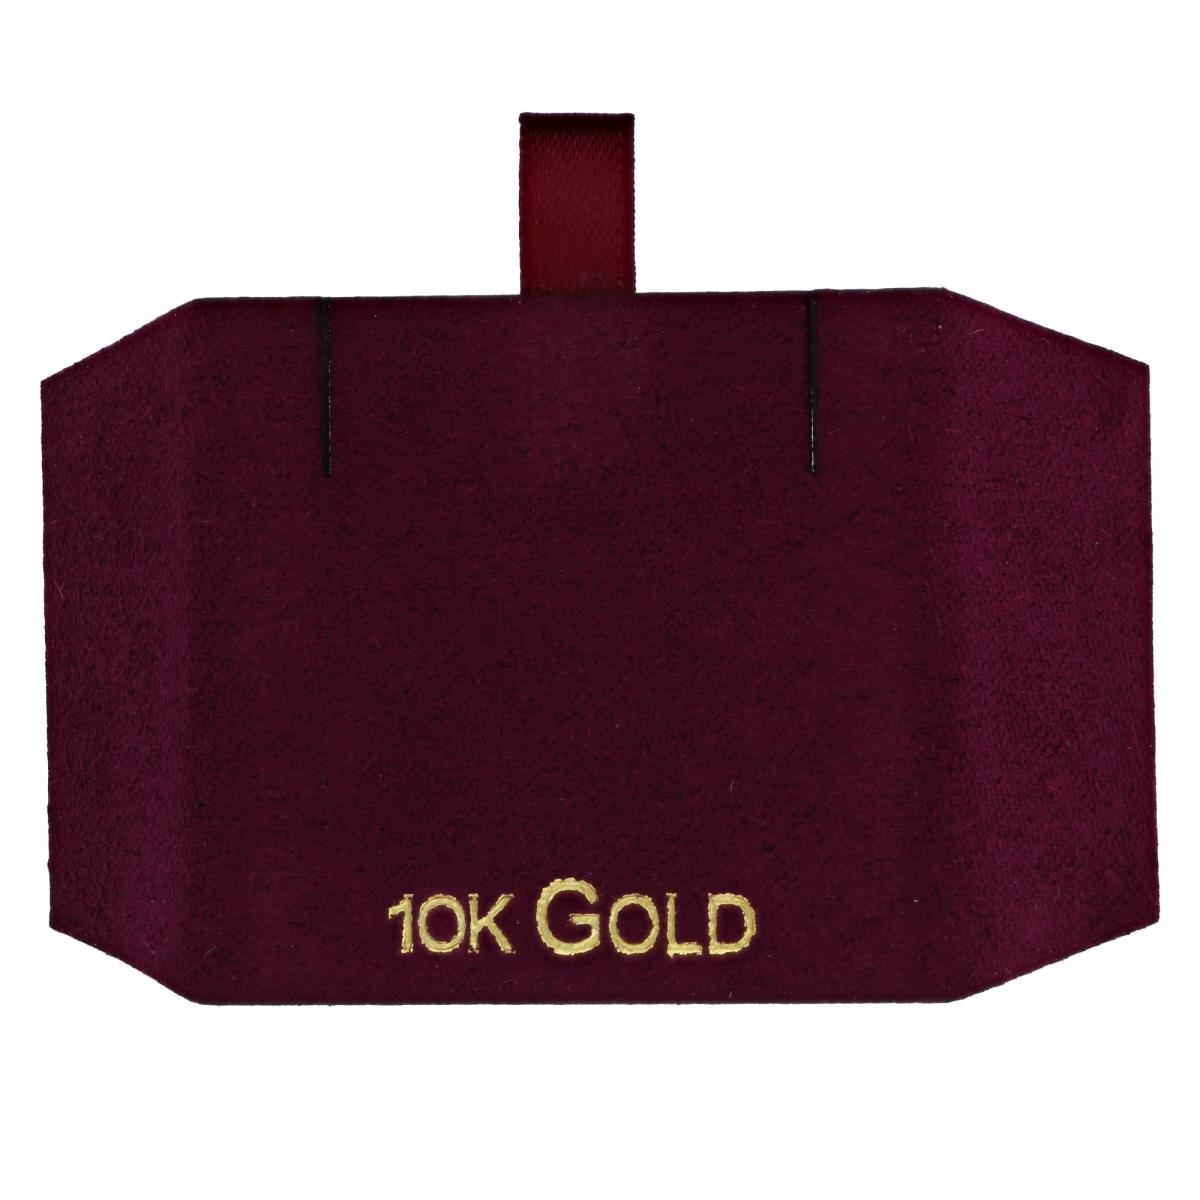 Wine 10K GOLD, Gold Foil Necklace Insert (Box B06-159/Green/D)